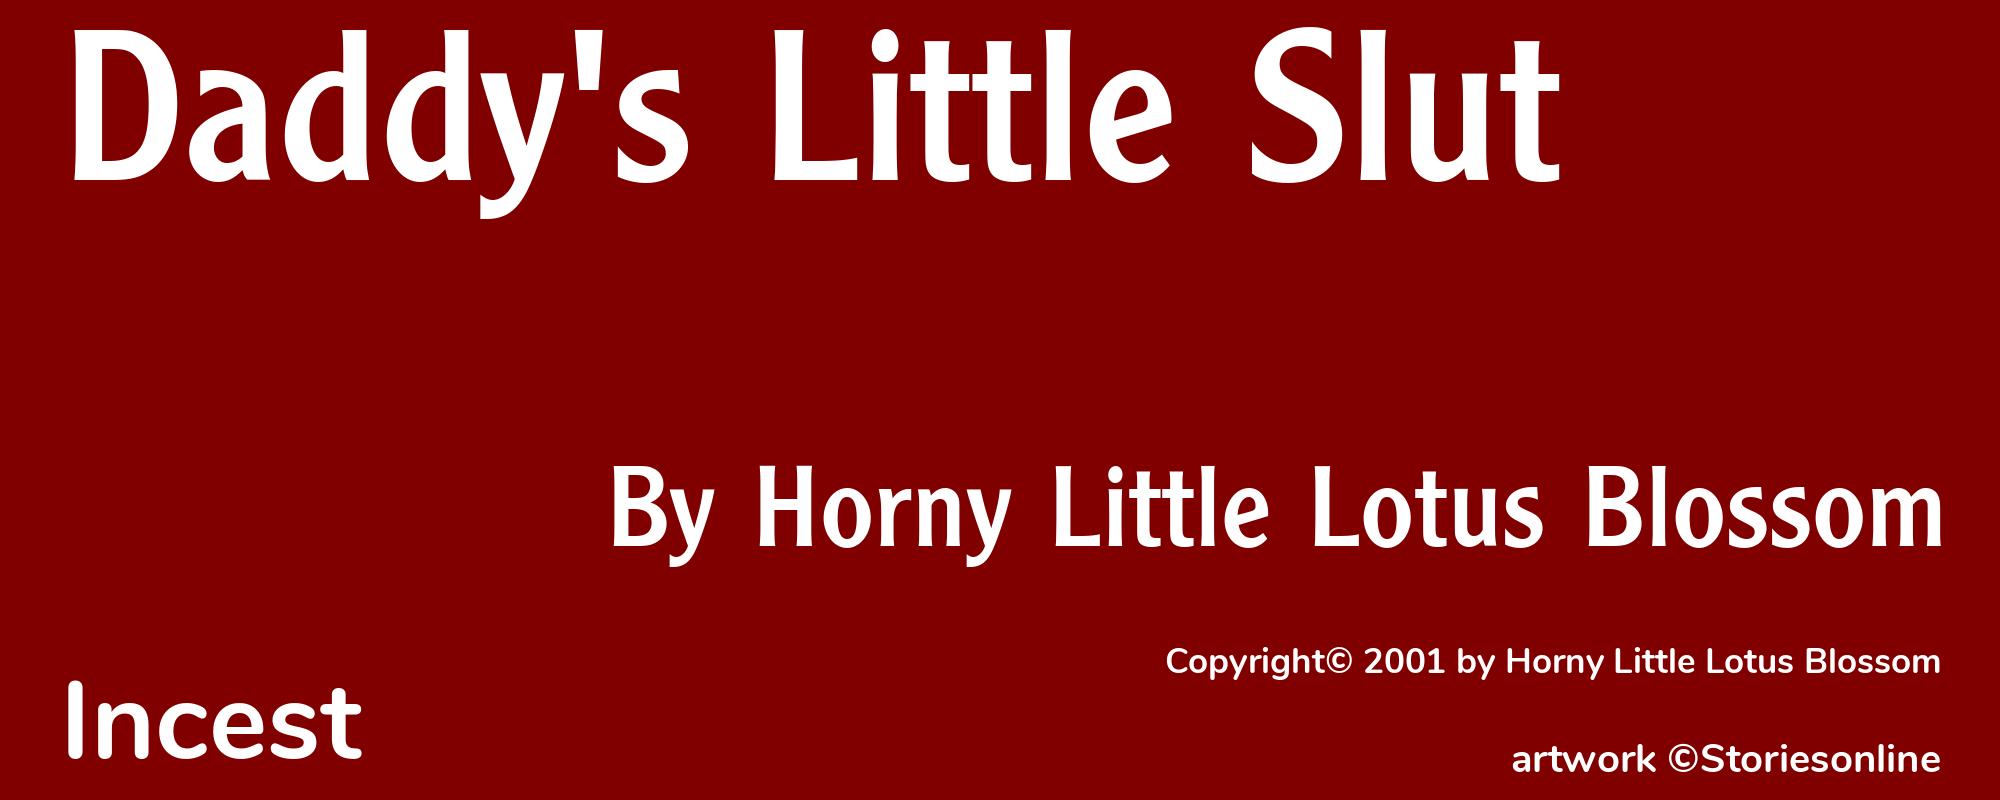 Daddy's Little Slut - Cover